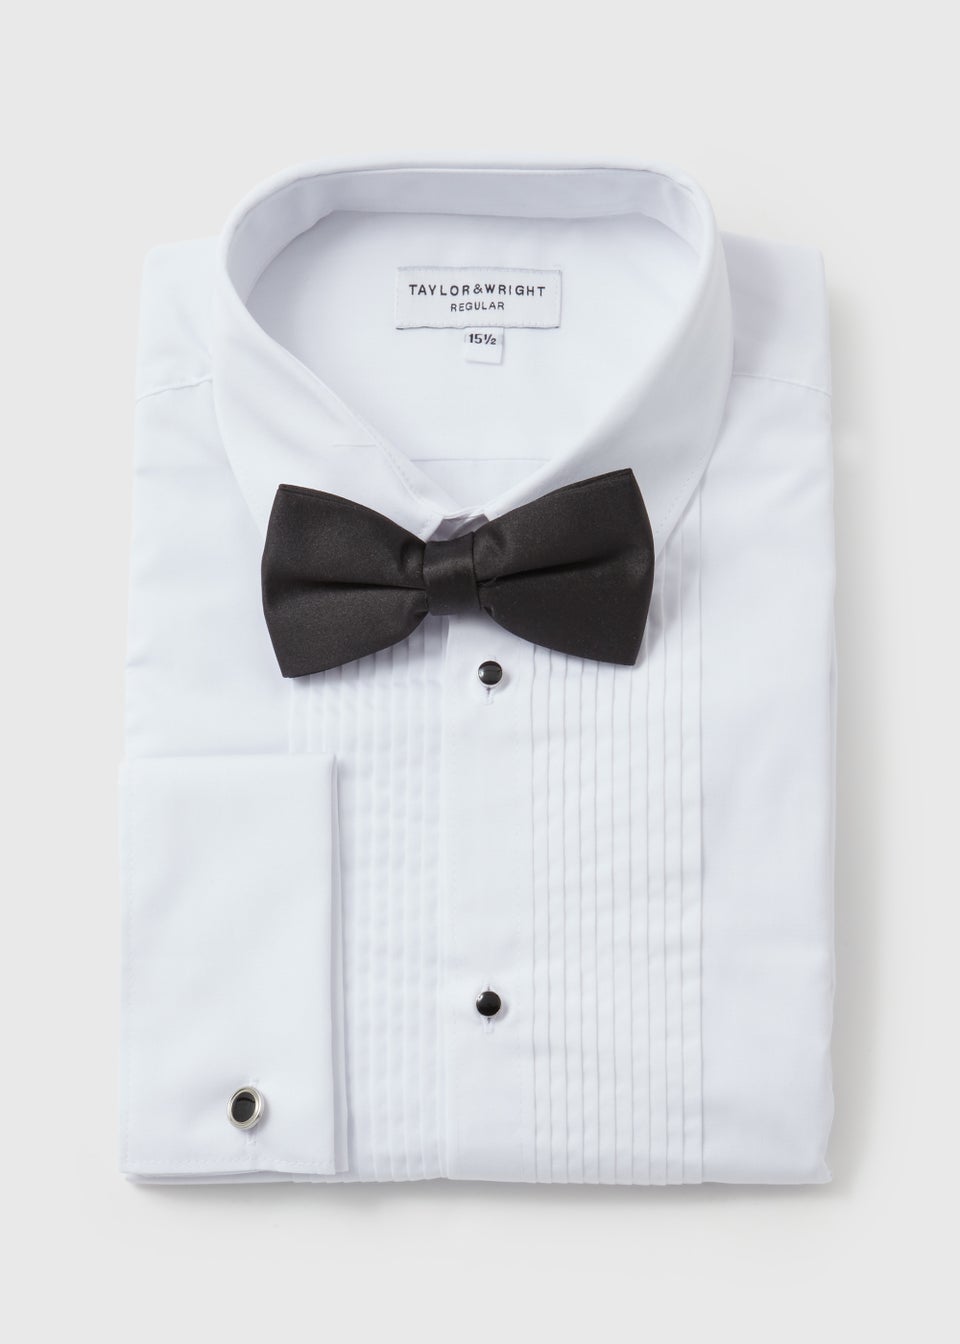 Taylor & Wright White Regular Fit Tuxedo Shirt & Bow Tie Set